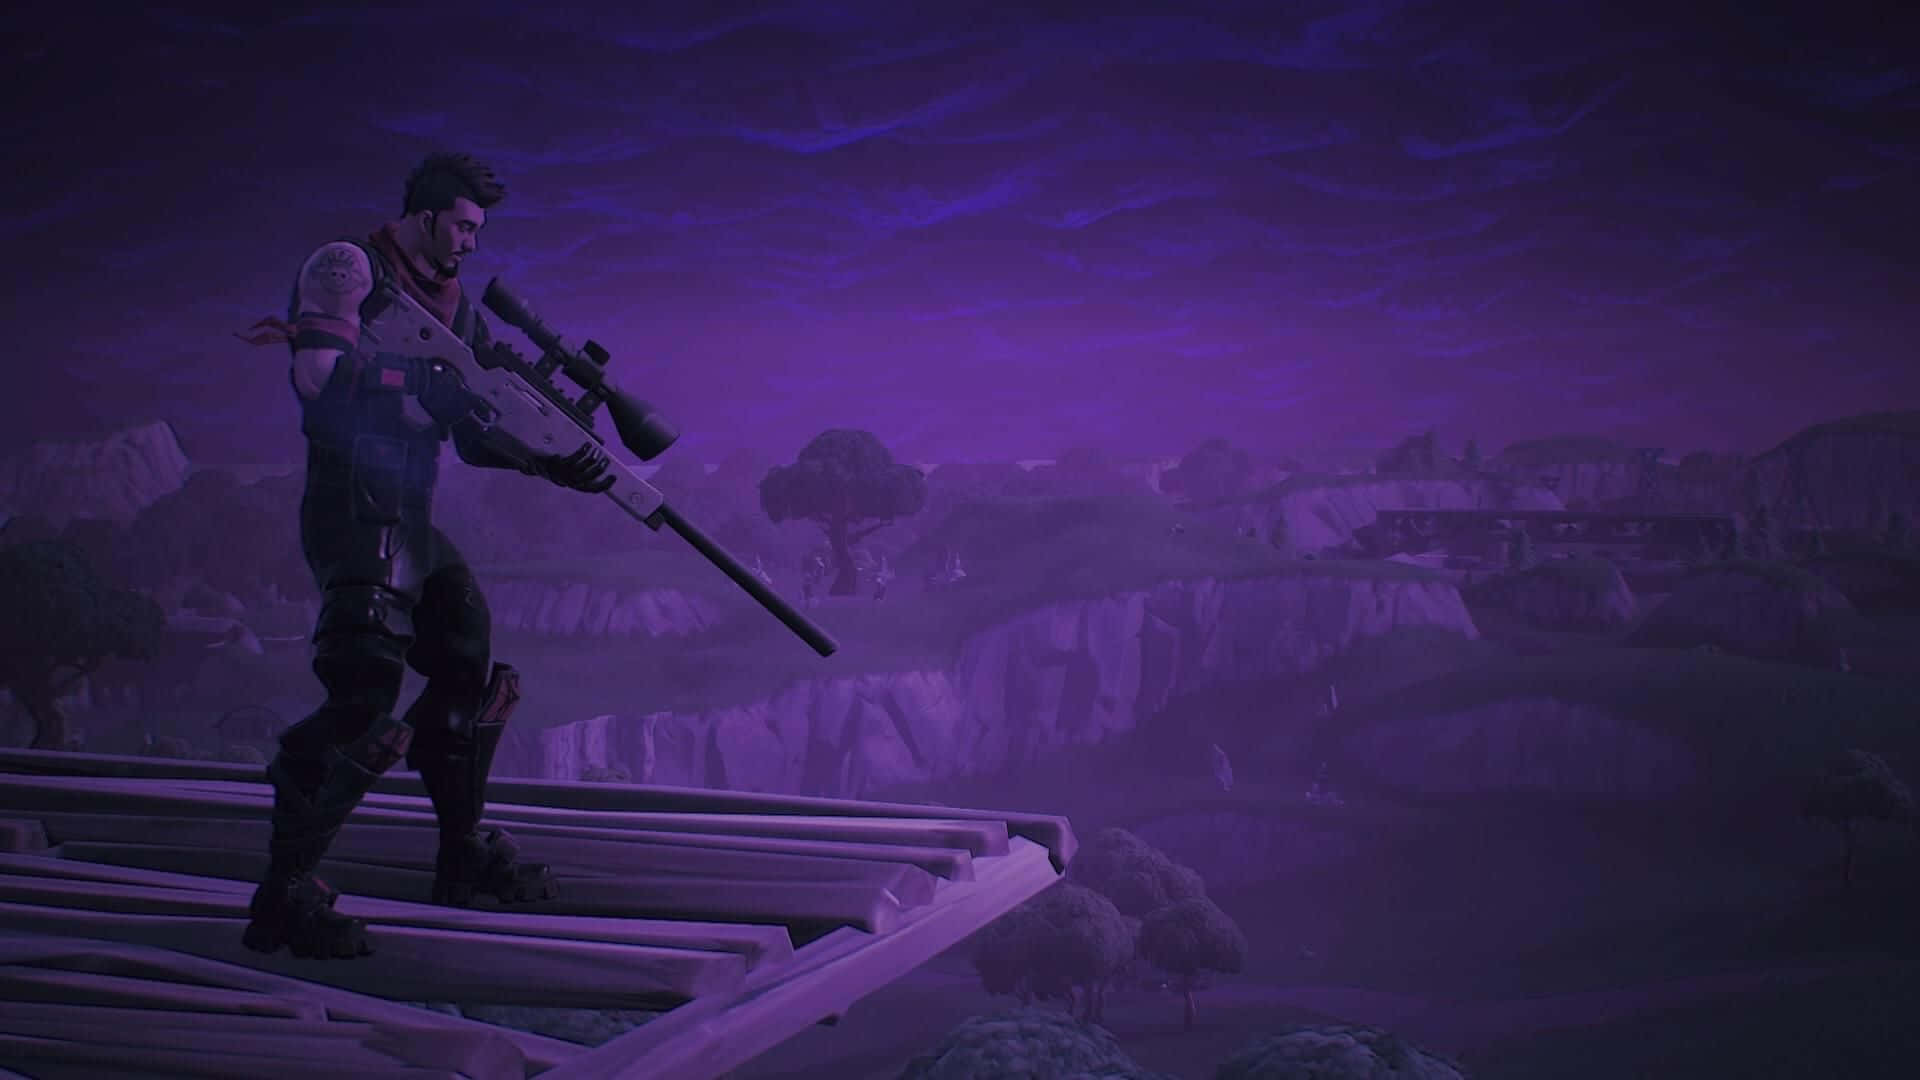 Feel the power of purple in Fortnite Wallpaper